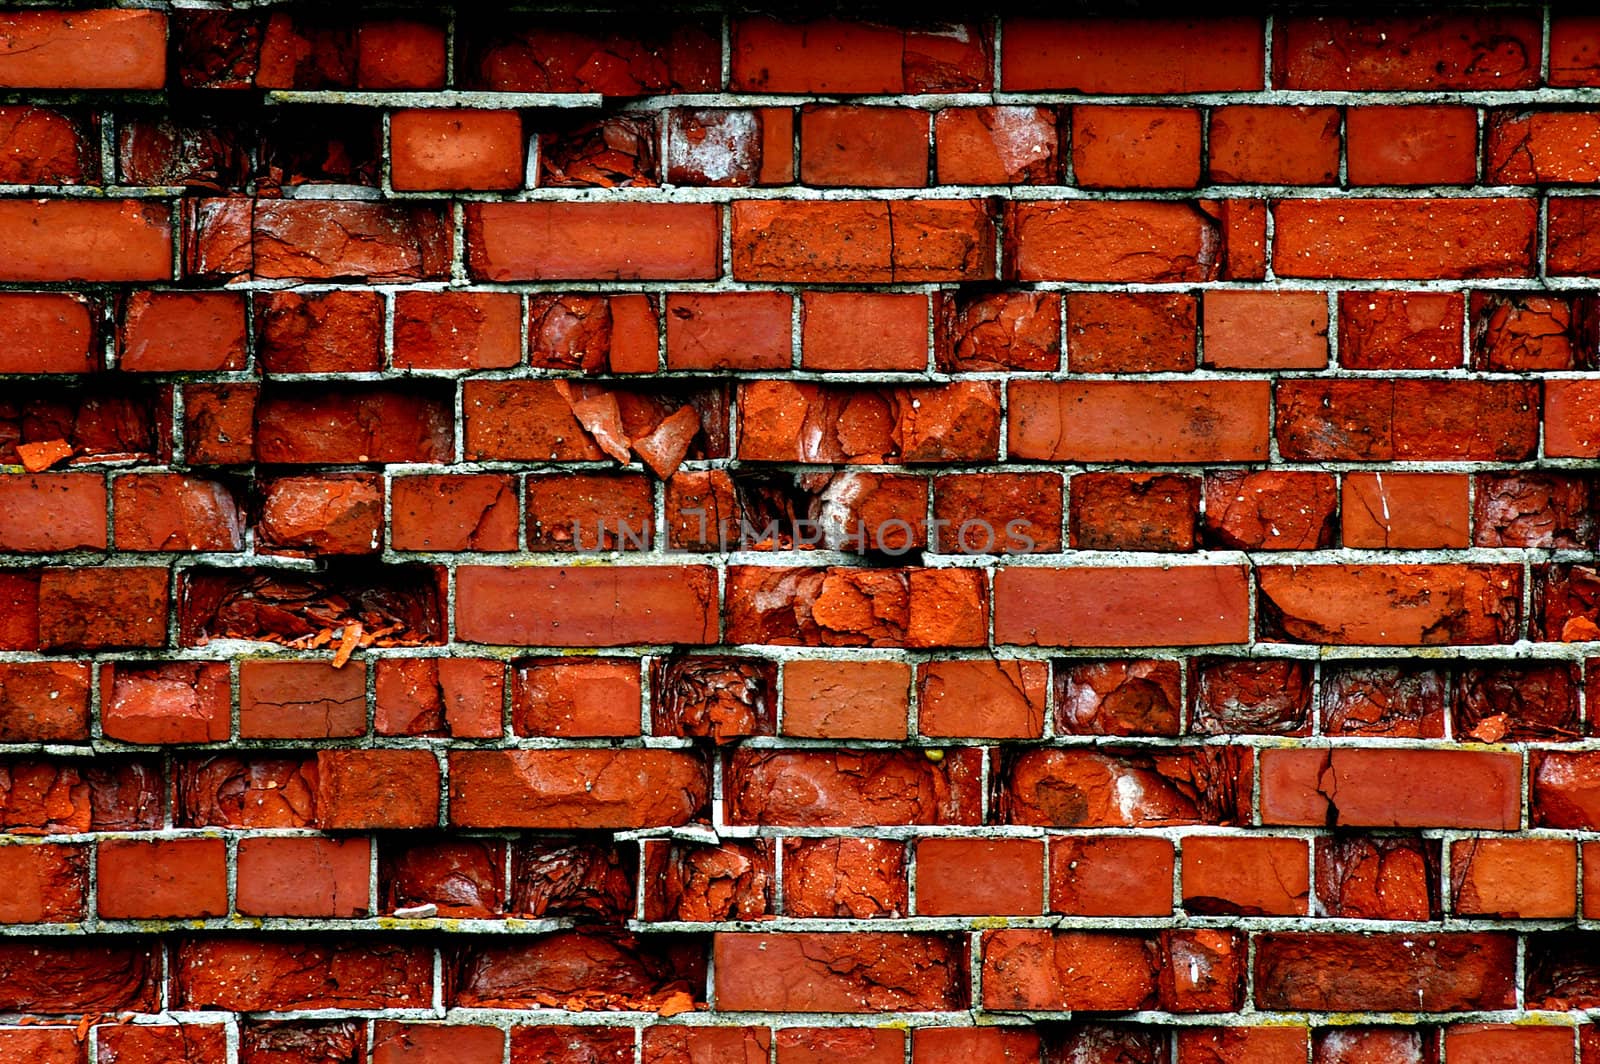 Brick Wall by thomasw